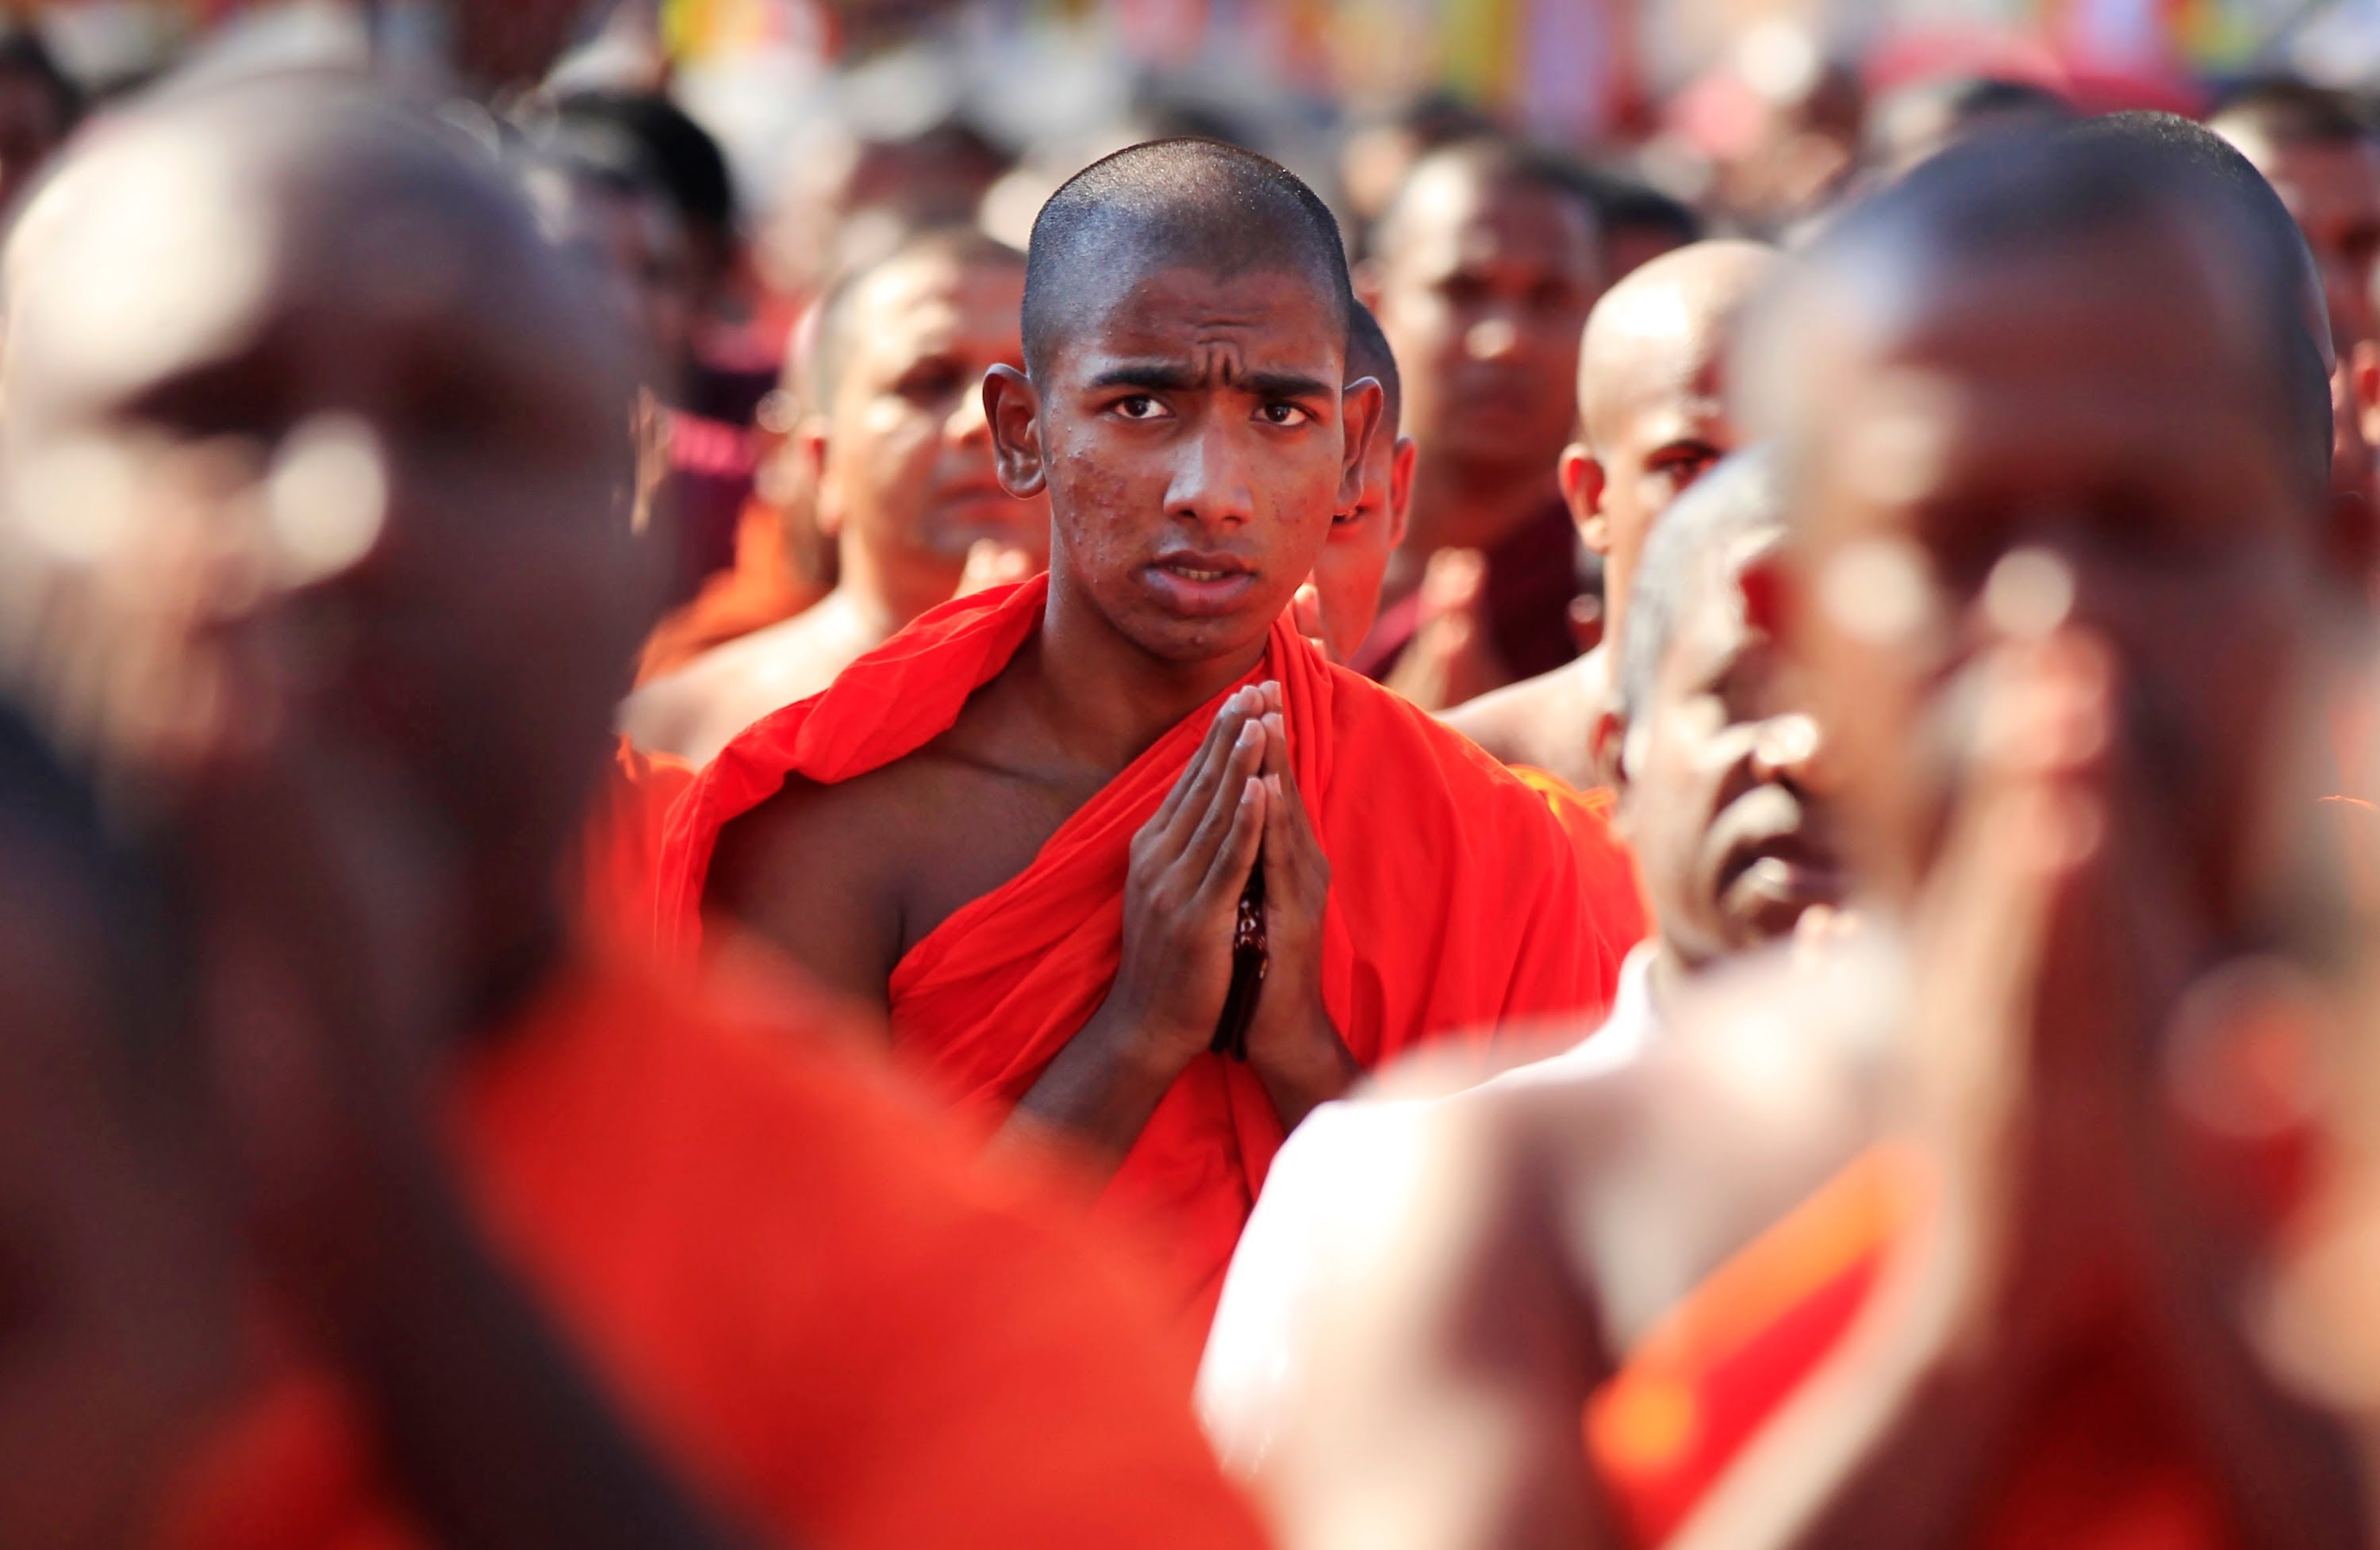 The violent side of Sri Lankan Buddhism - YouTube